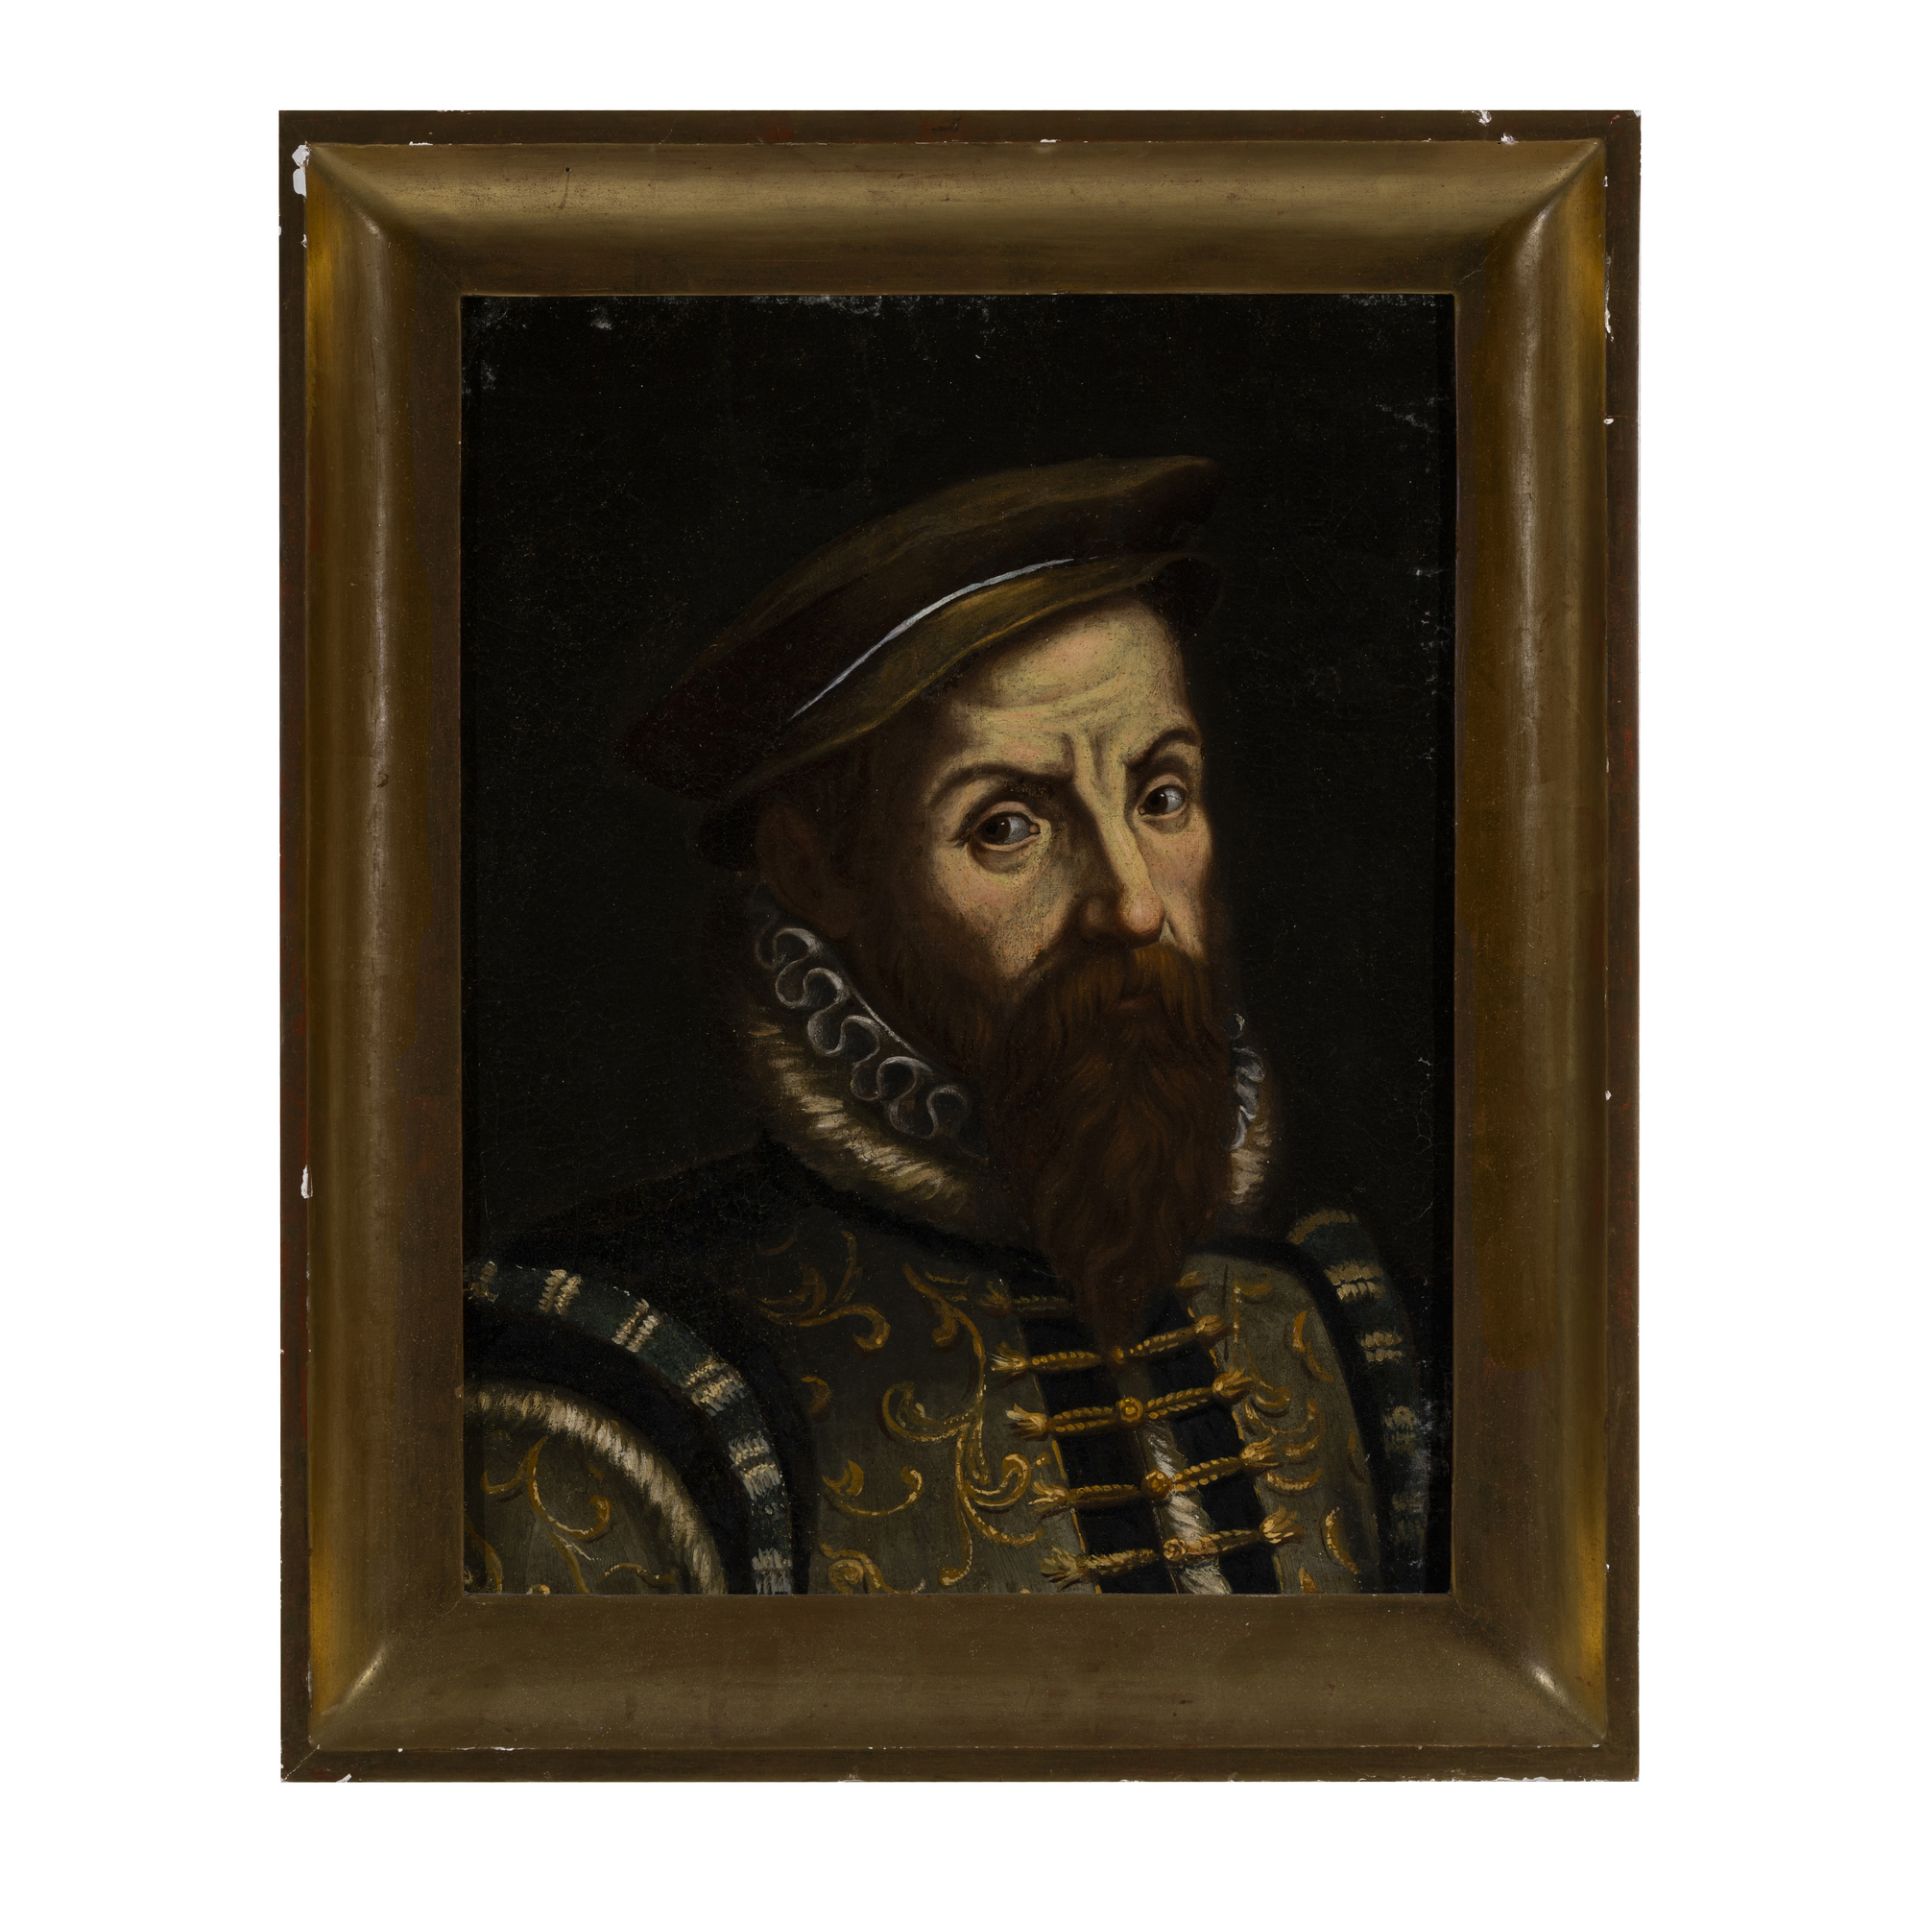 Bottega di Anthonis Mor van Dashorst o Antonio Moro (Utrecht 1520 - Anversa 1577)